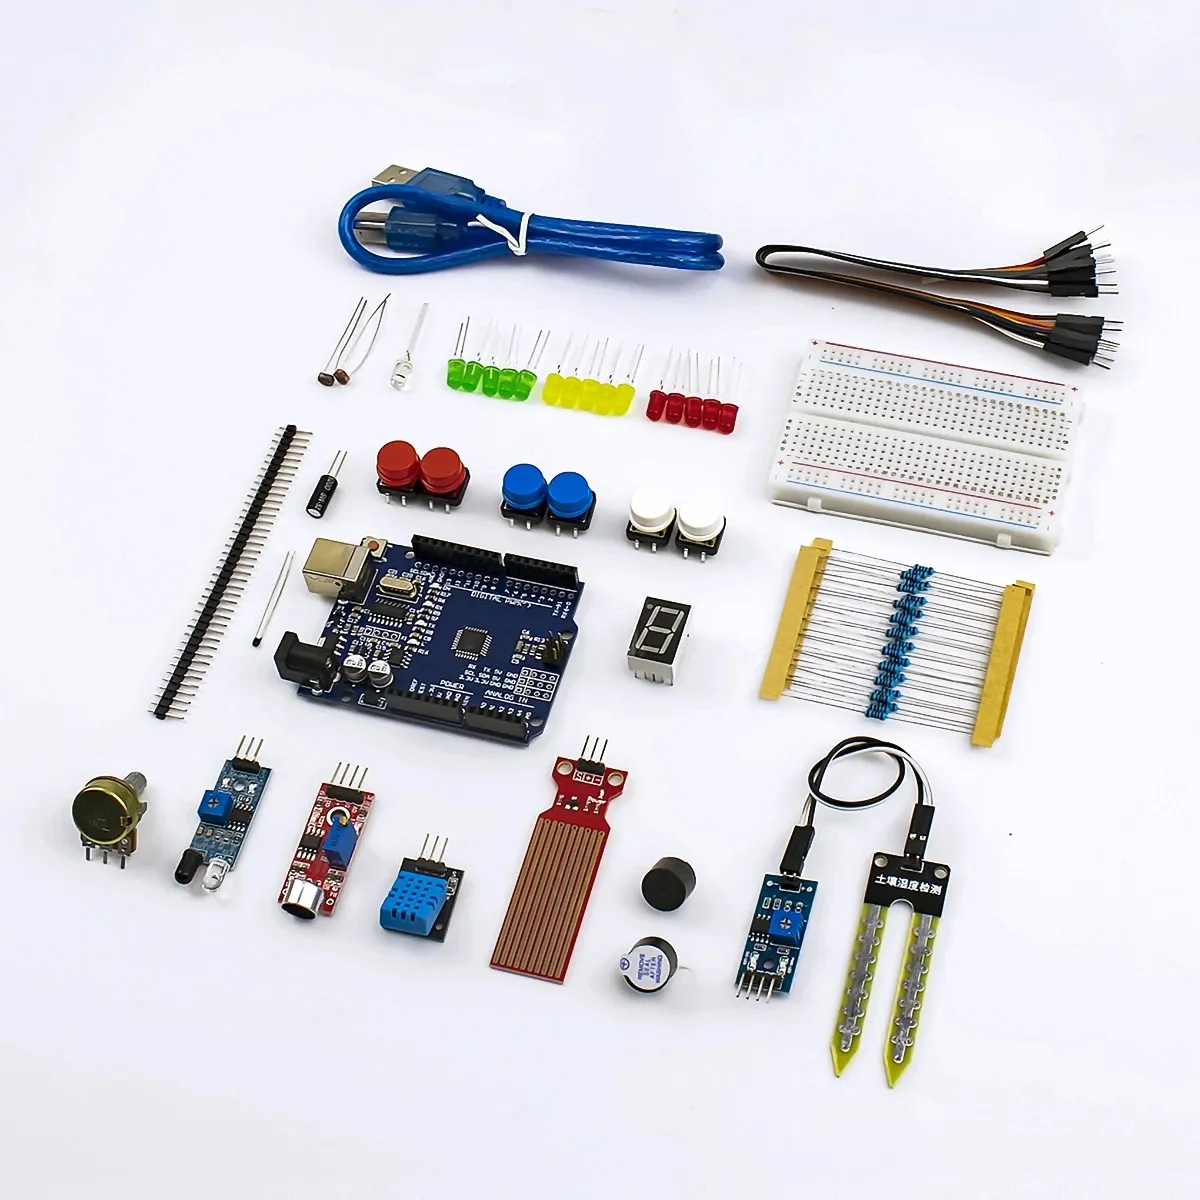 Basic Starter Kit for R3 DIY Kit with Retail Box for School Kids Education Programming kit for arduinos educational toys